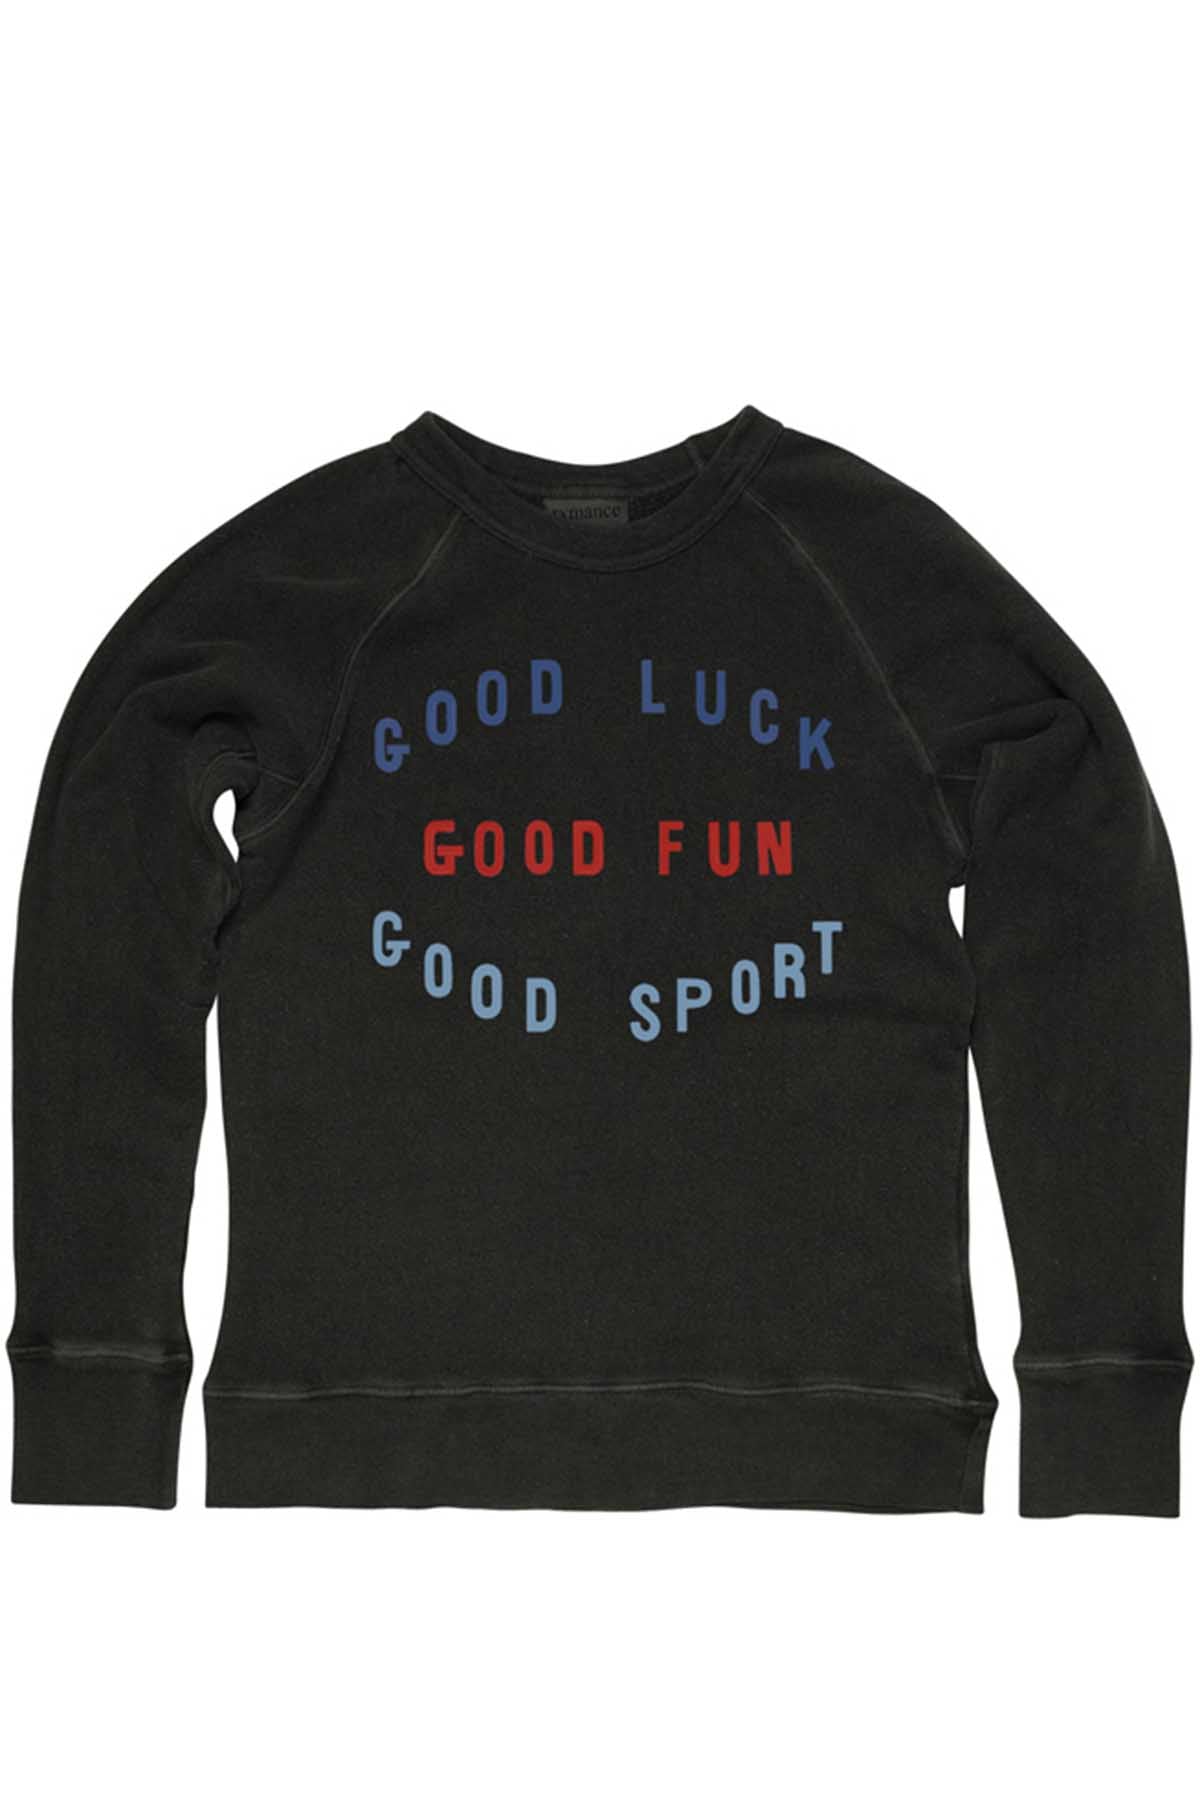 Rxmance Unisex Vintage Black 'Good Sport' Sweatshirt